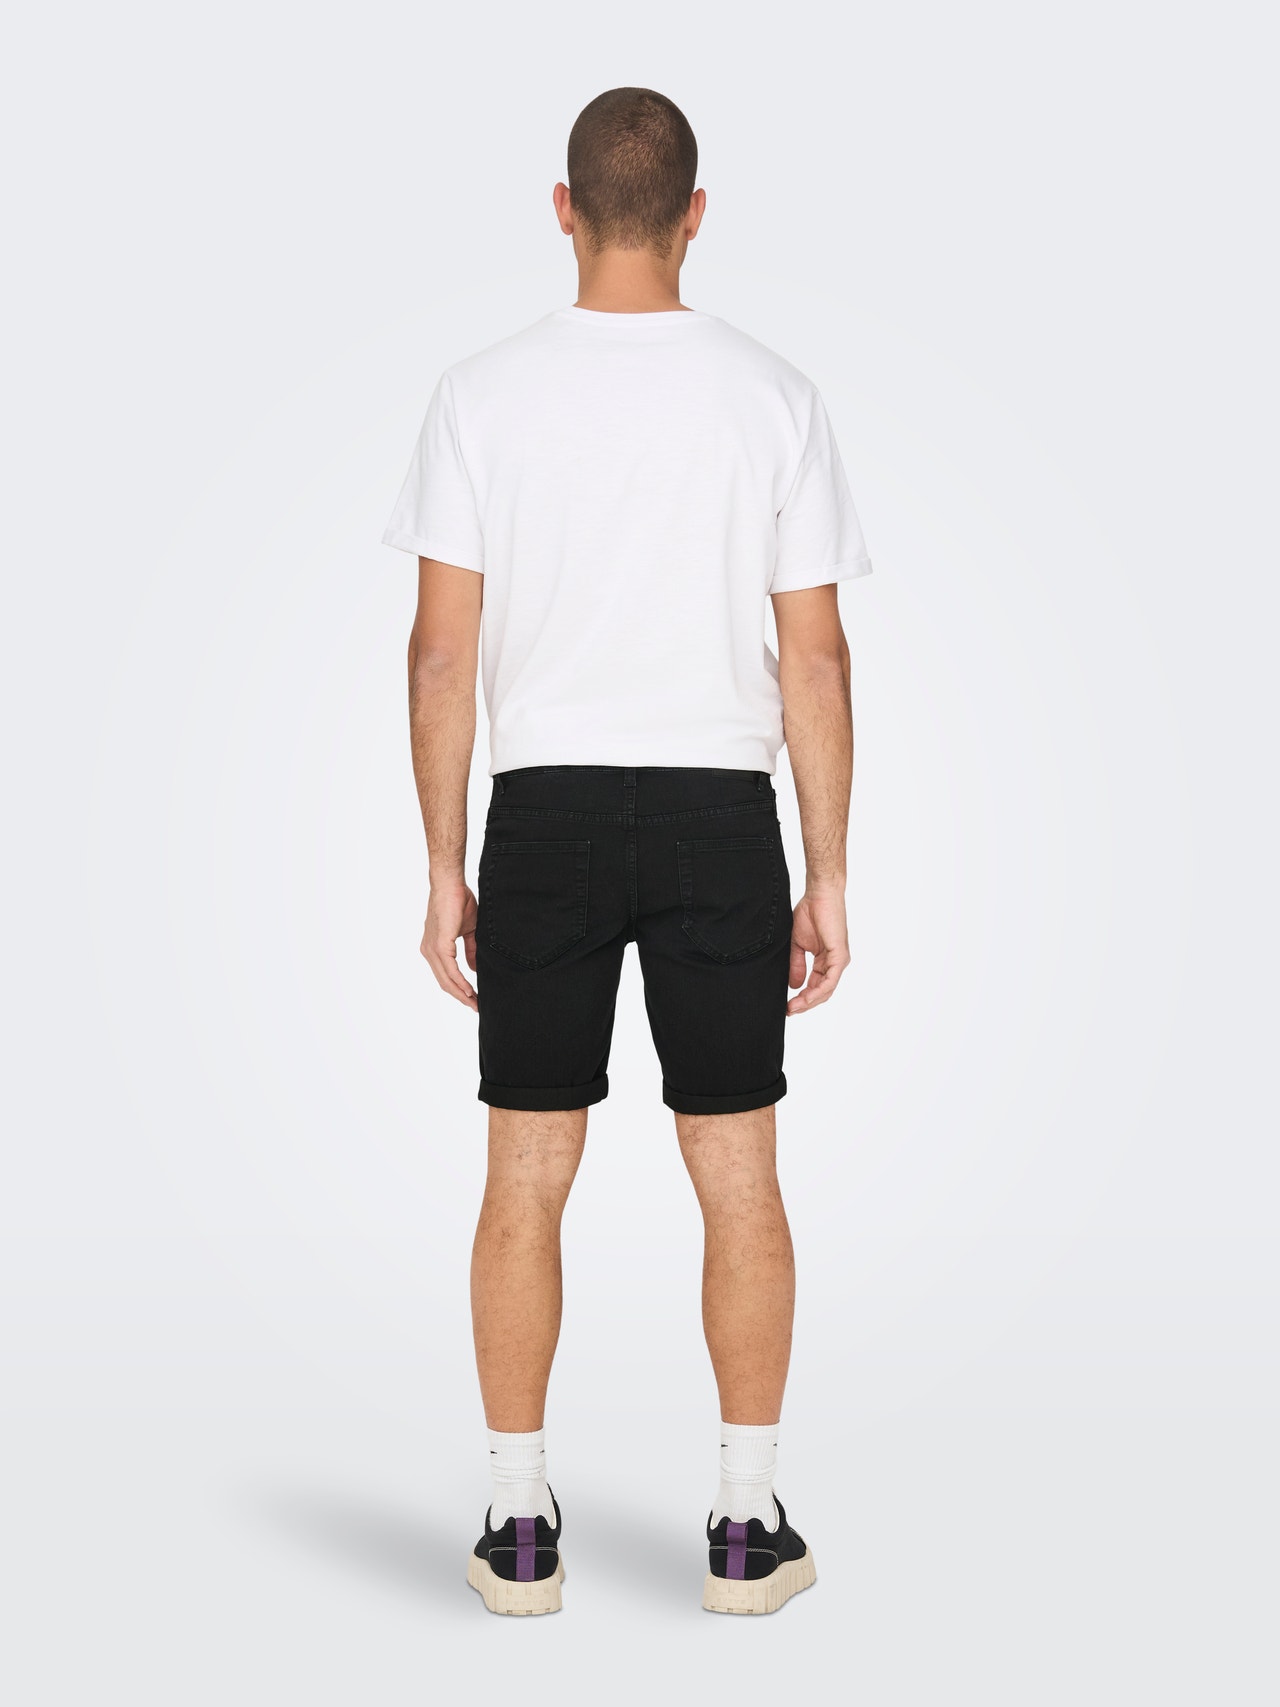 ONLY & SONS Shorts Corte regular Tiro normal -Washed Black - 22026239